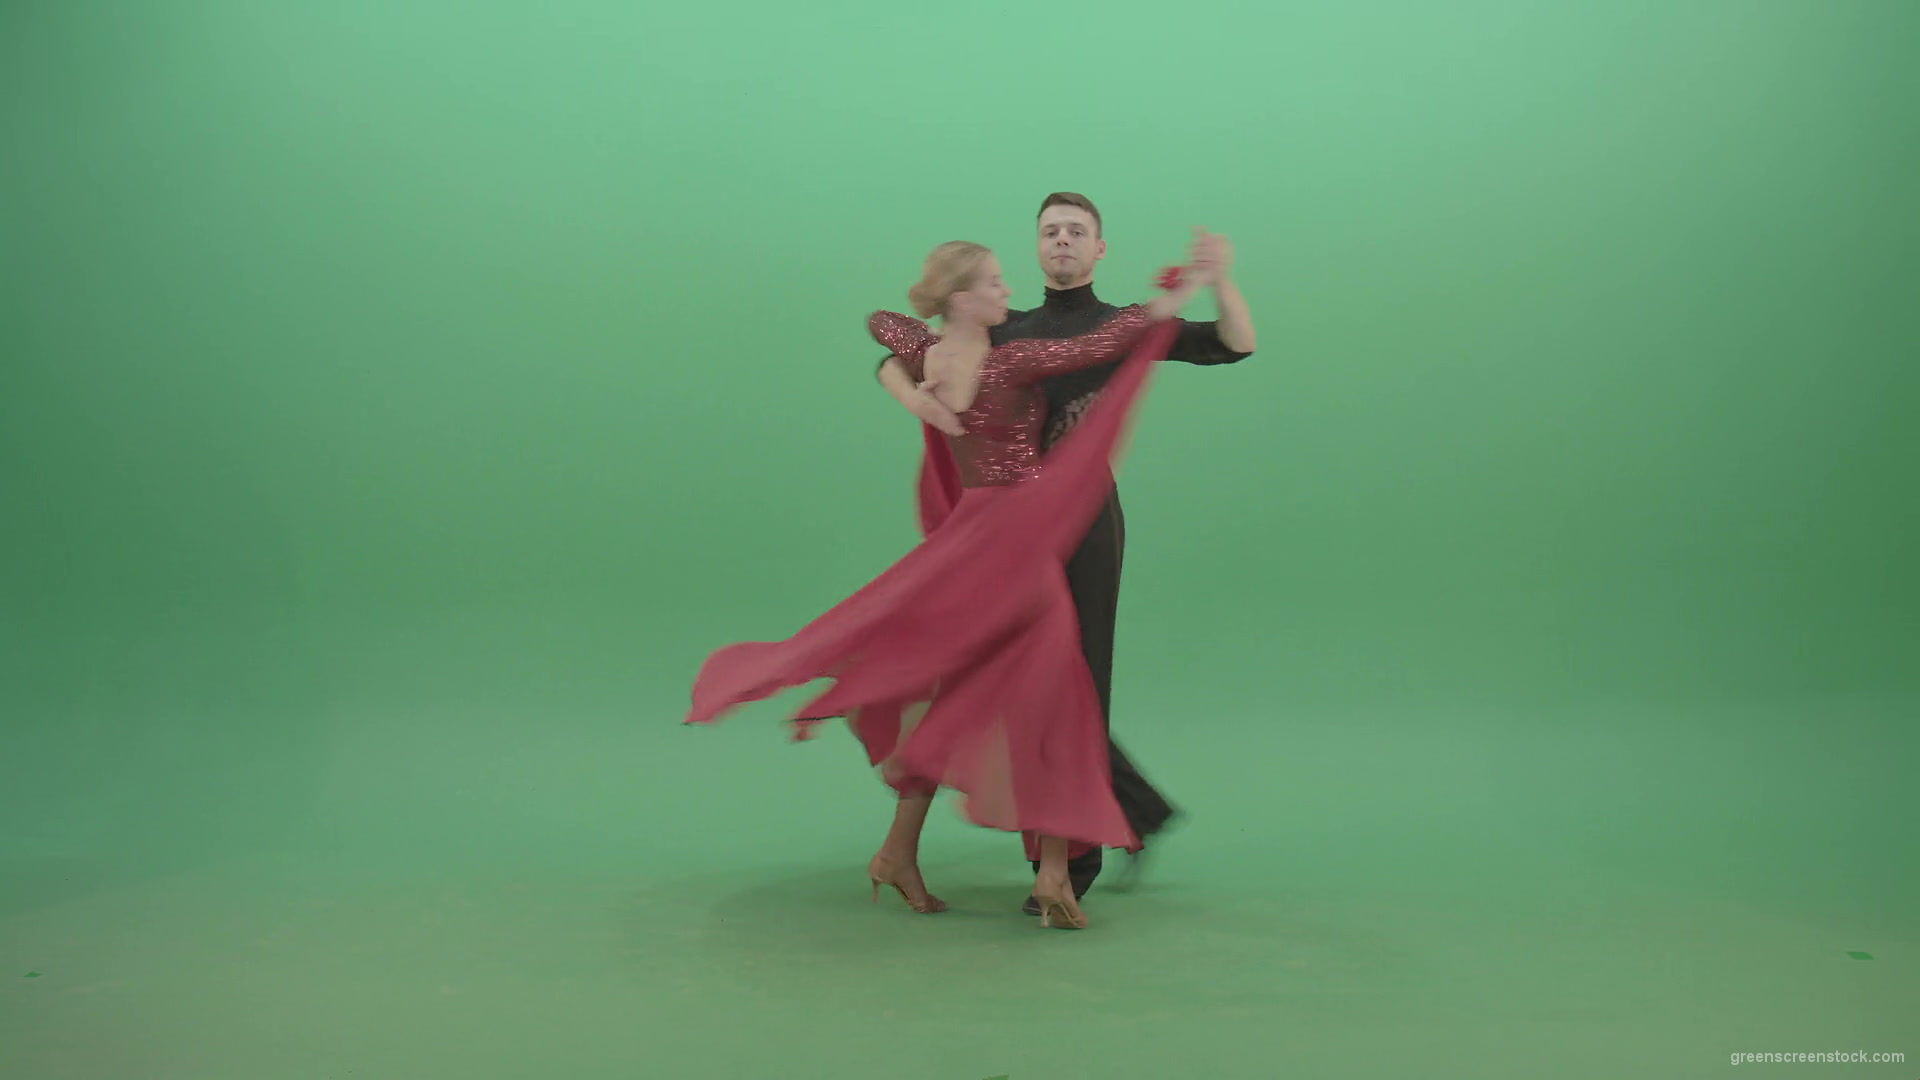 Beautiful-Pair-dancing-ballroom-dance-with-grand-opening-on-green-screen-4K-Video-Footage-1920_007 Green Screen Stock